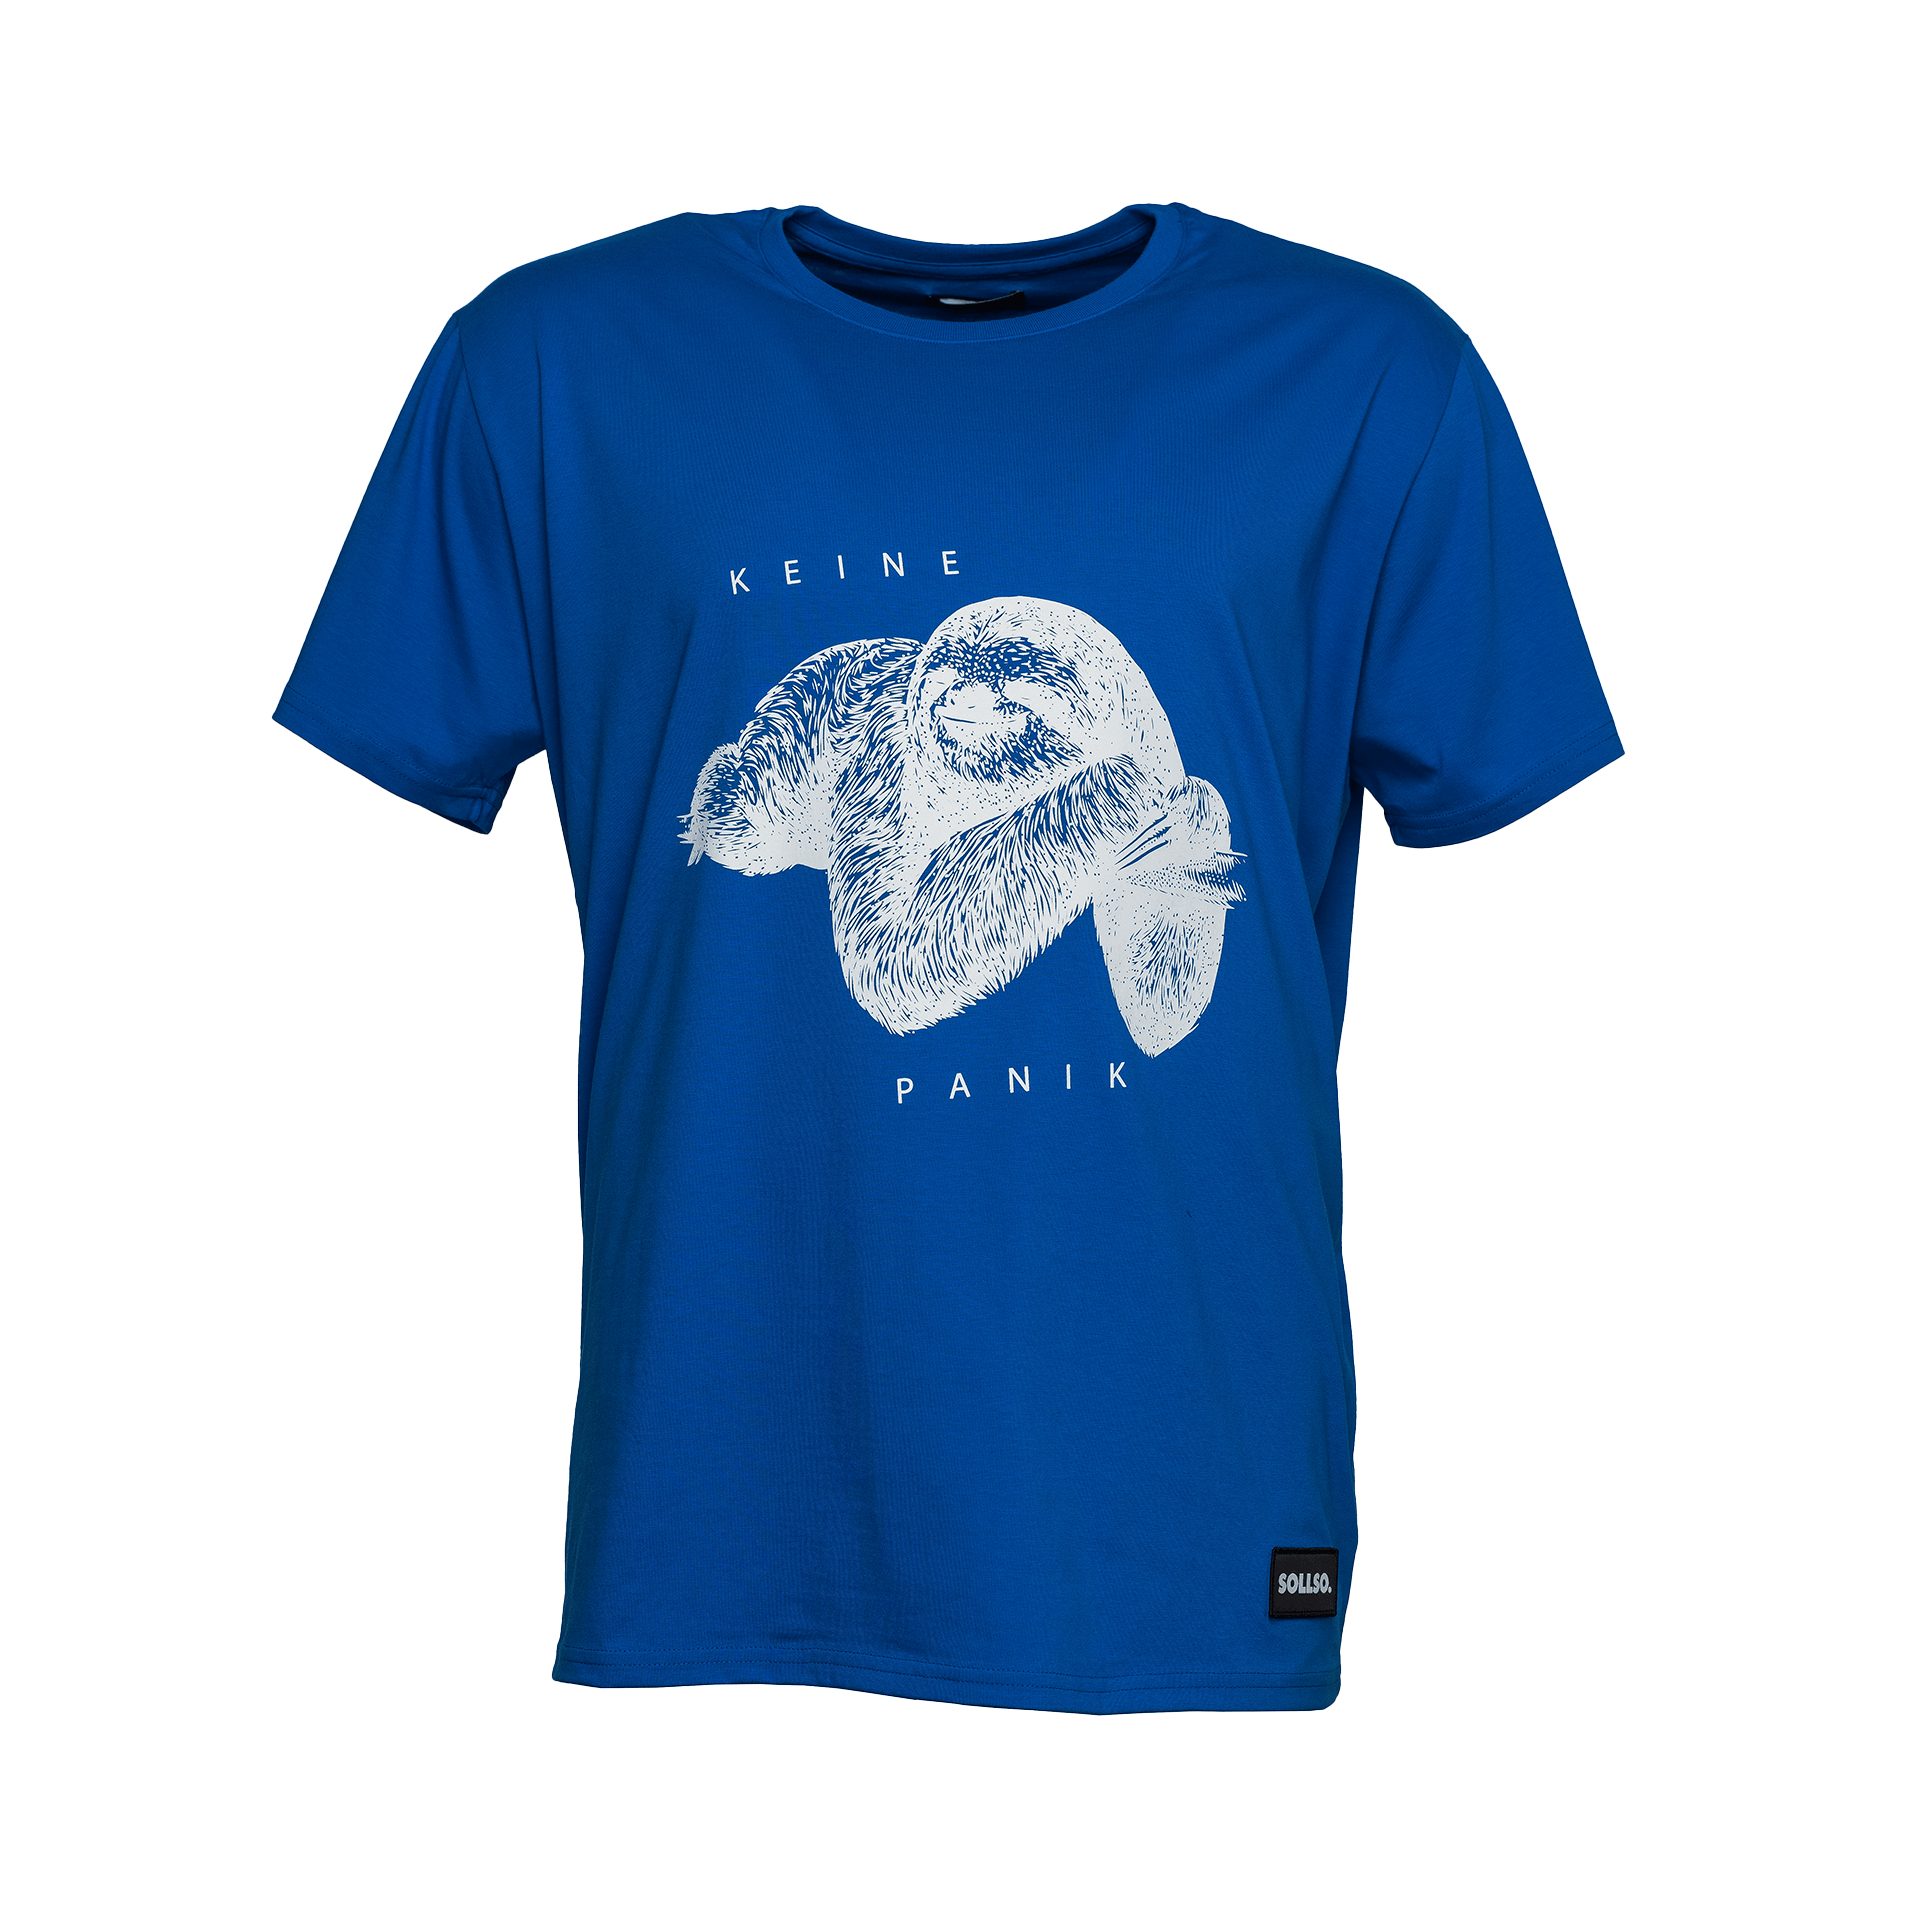 SOLLSO. T-Shirt "Keine Panik Faultier", Farbe Ocean Blue, Größe XXL